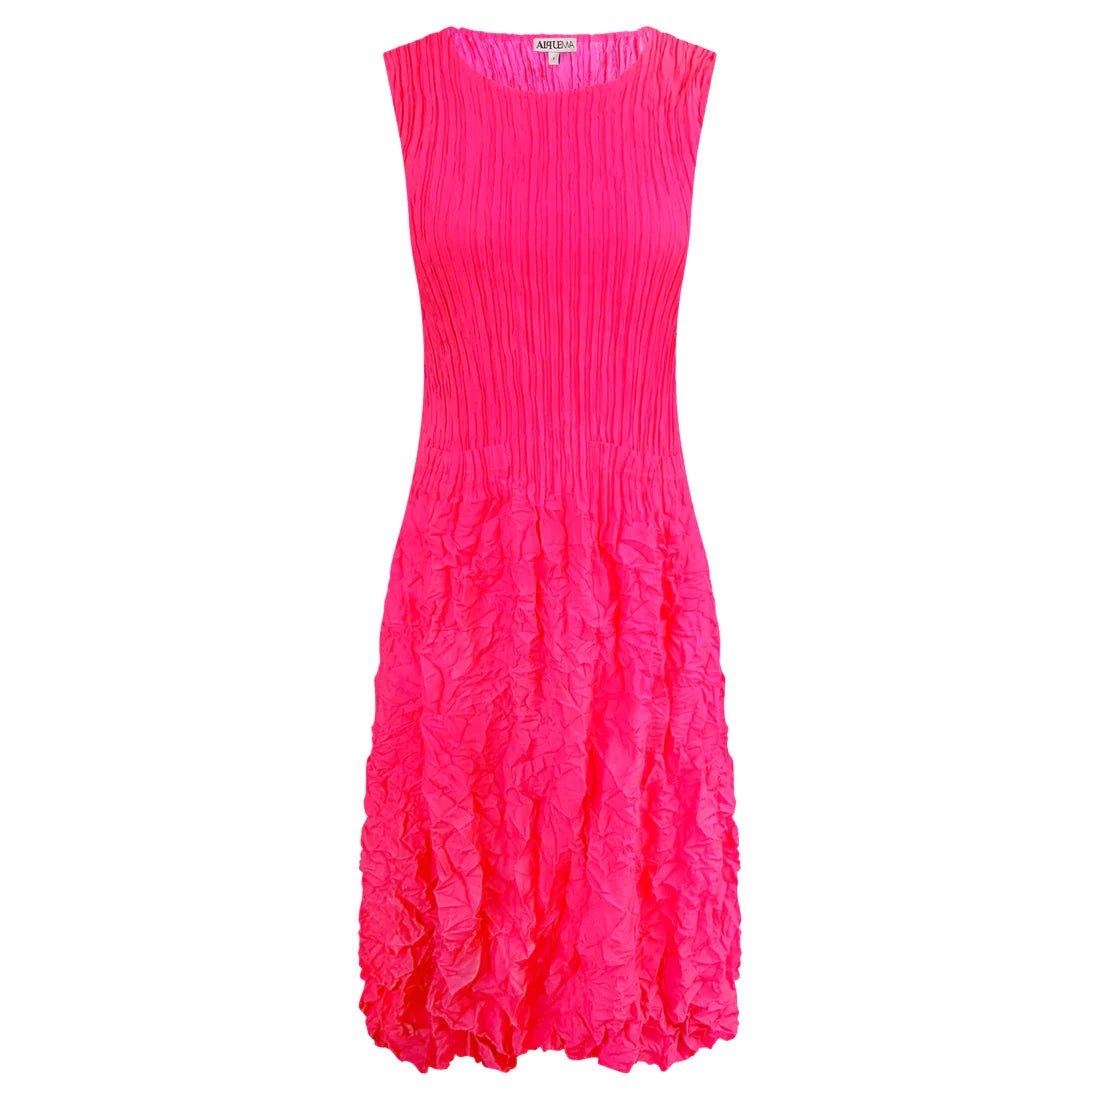 ALQUEMA - Smash Pocket Dress - Mars Pink - Pinkhill, Darwin boutique, Australian high end fashion, Darwin Fashion